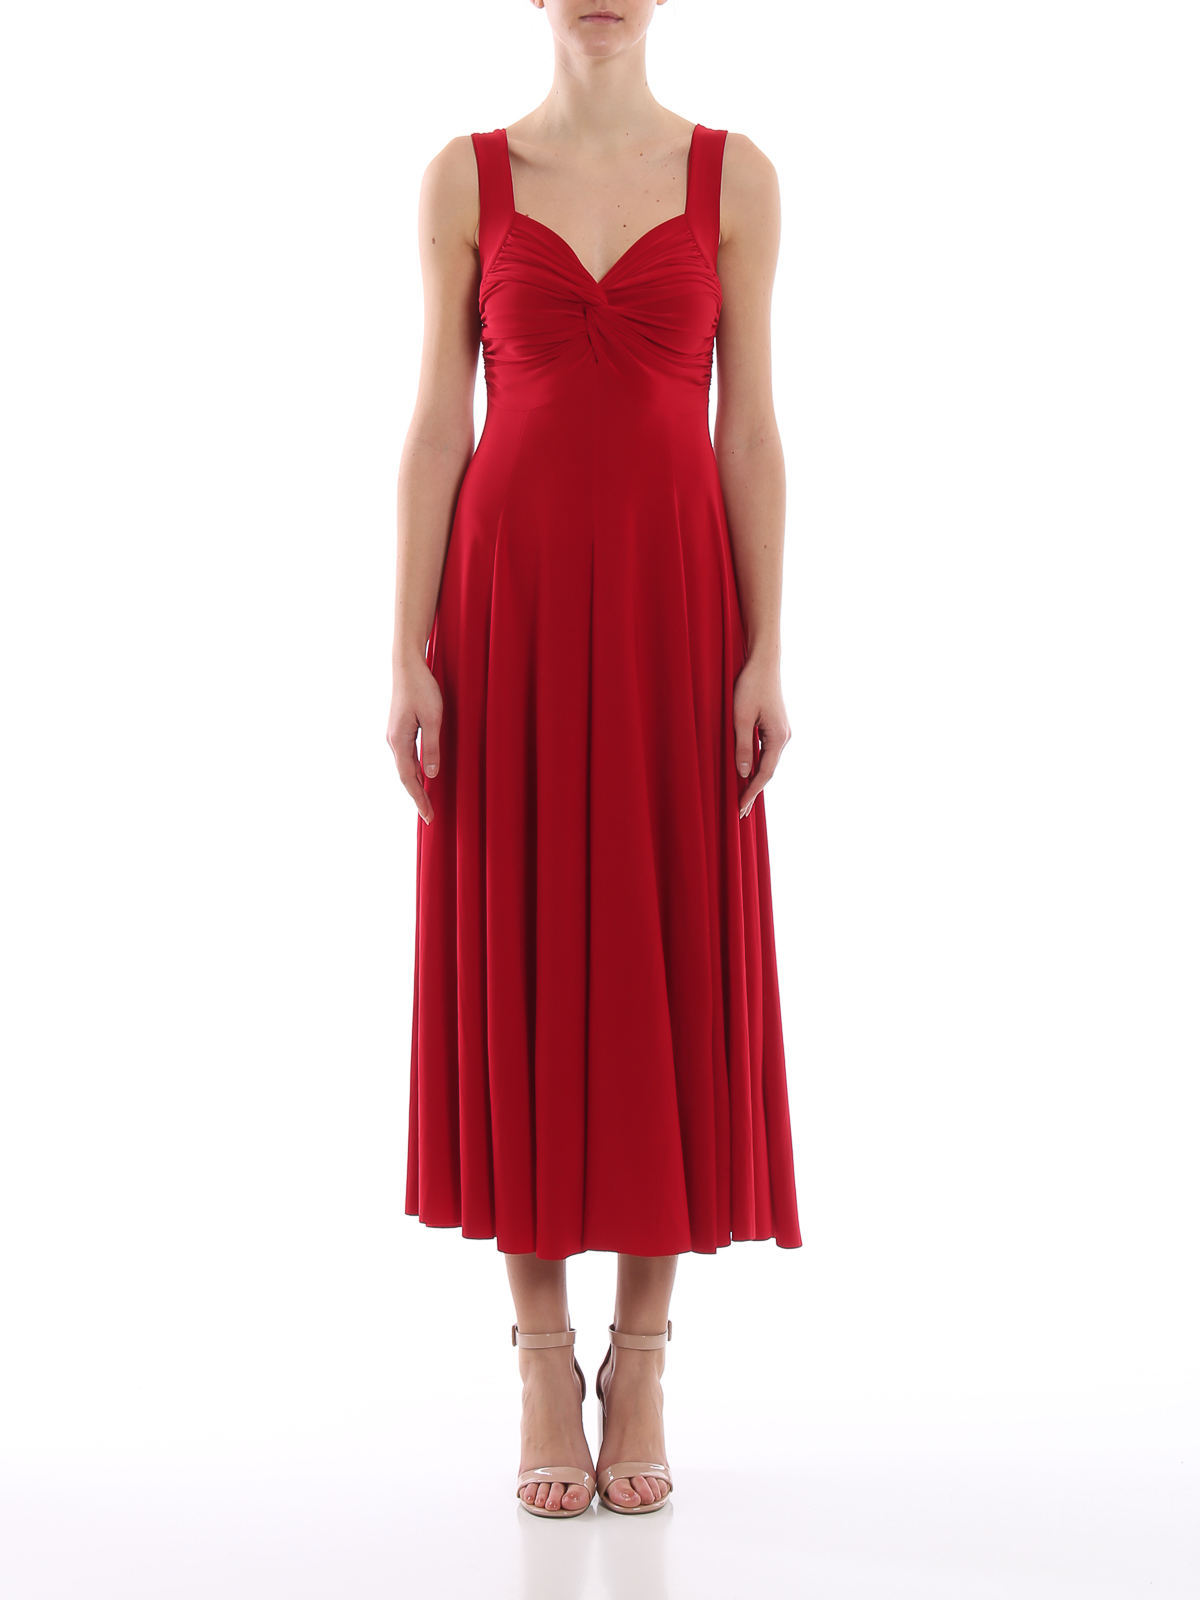 Norma Kamali Dress Red